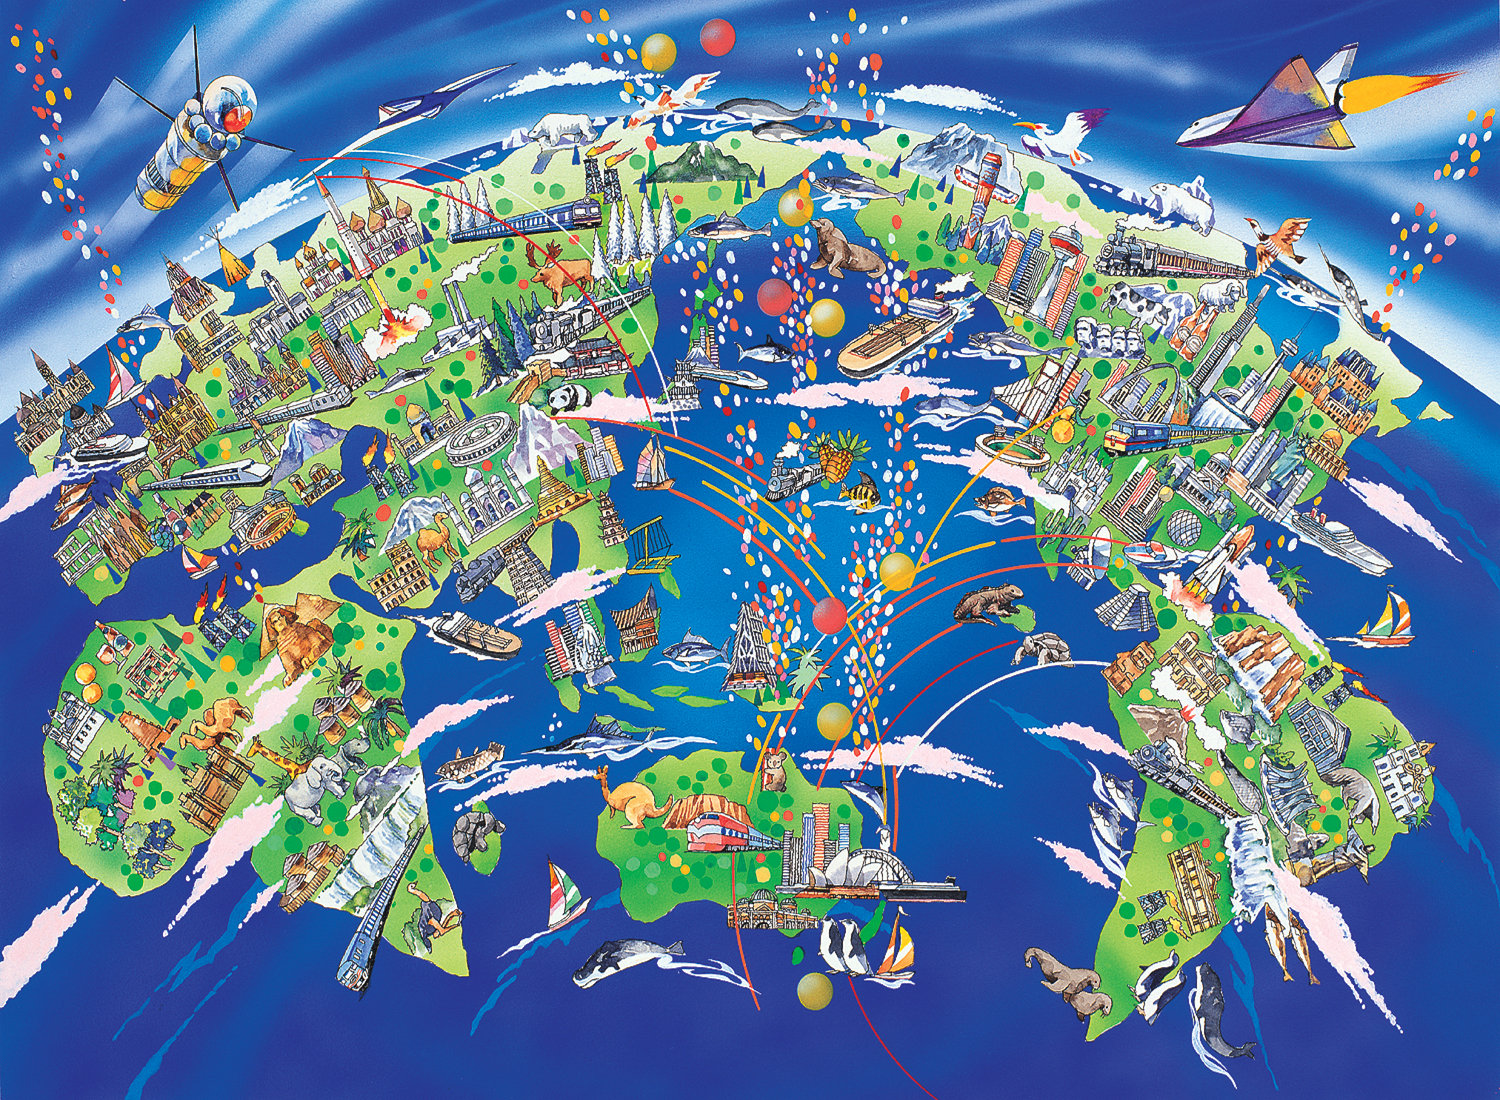 500 Piece Jigsaw Puzzle World Map 